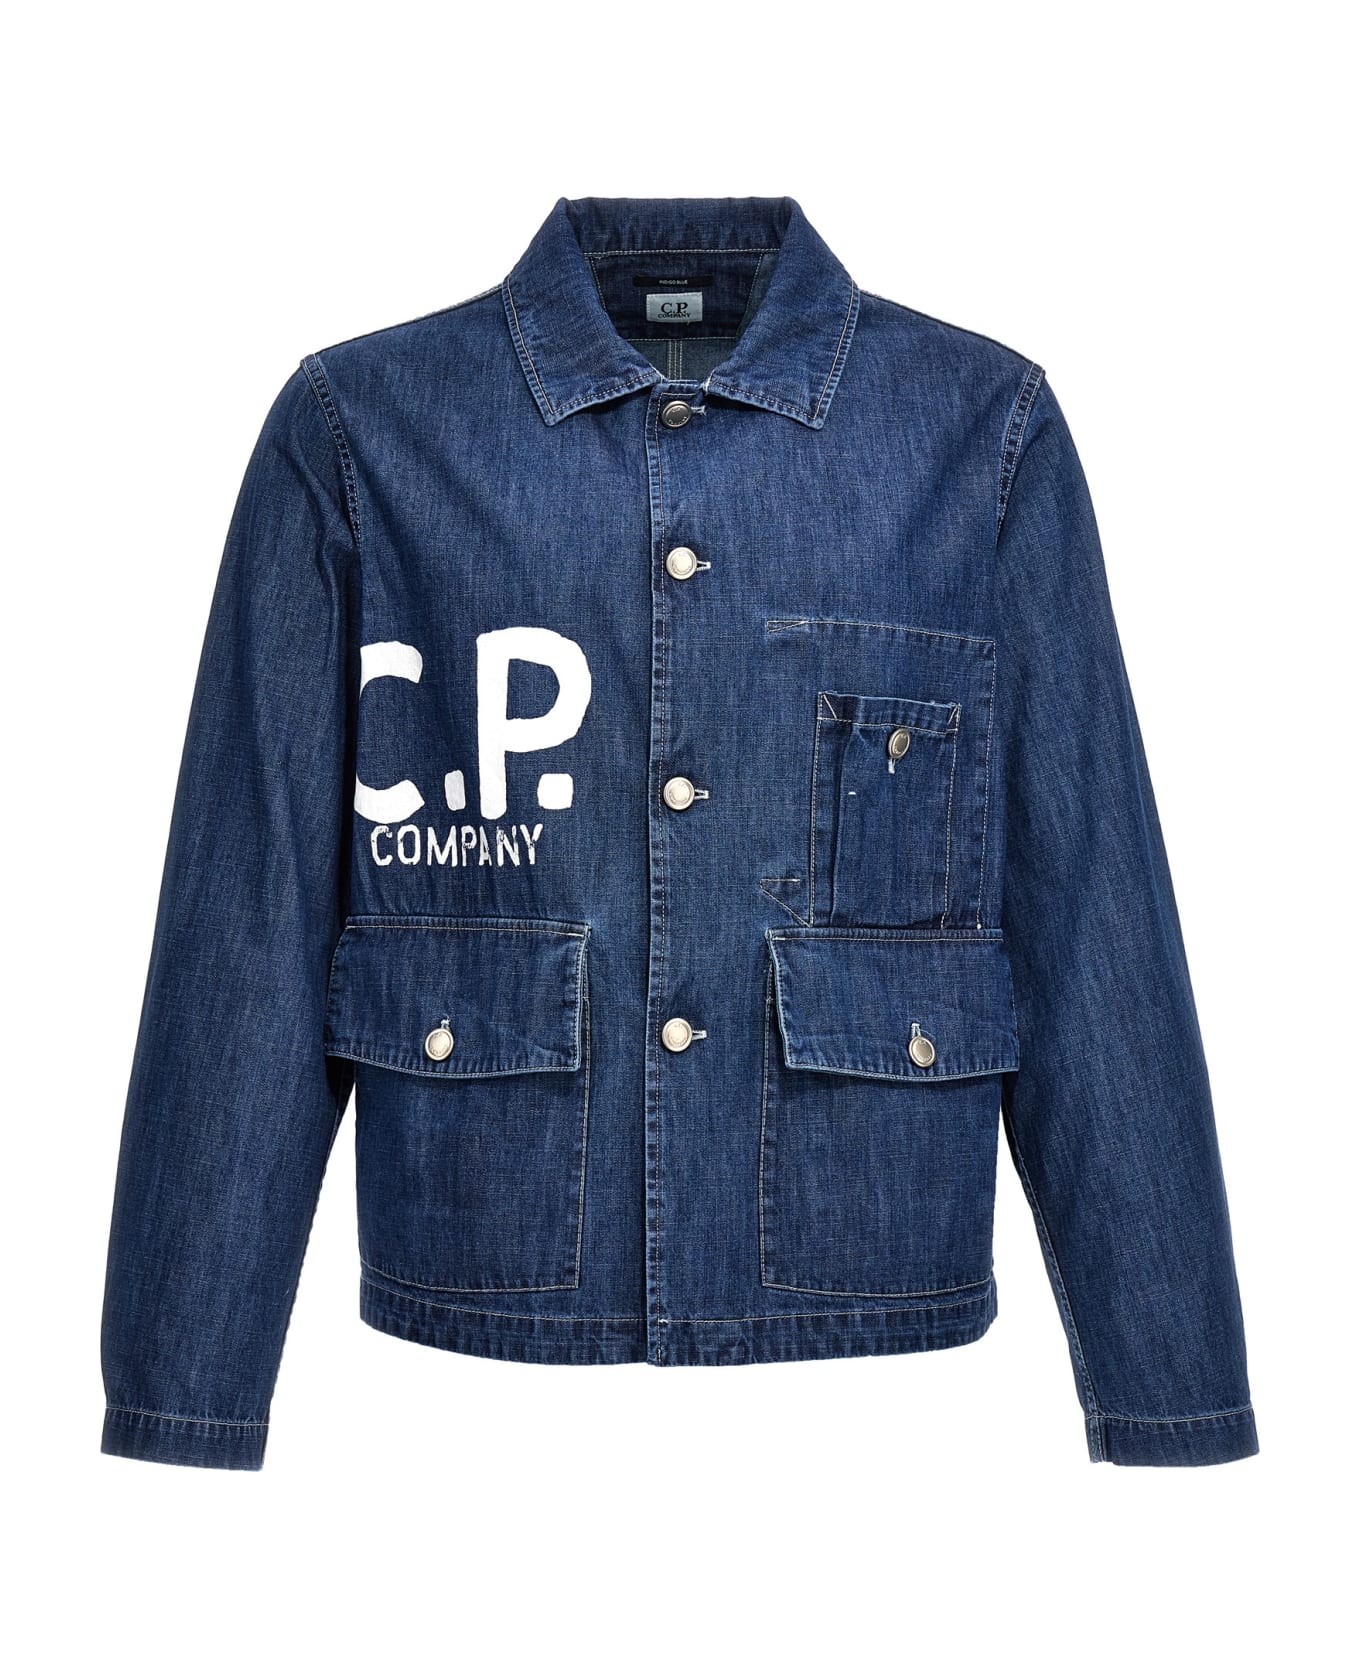 C.P. Company 'outerwear Medium' Jacket - Blue ジャケット